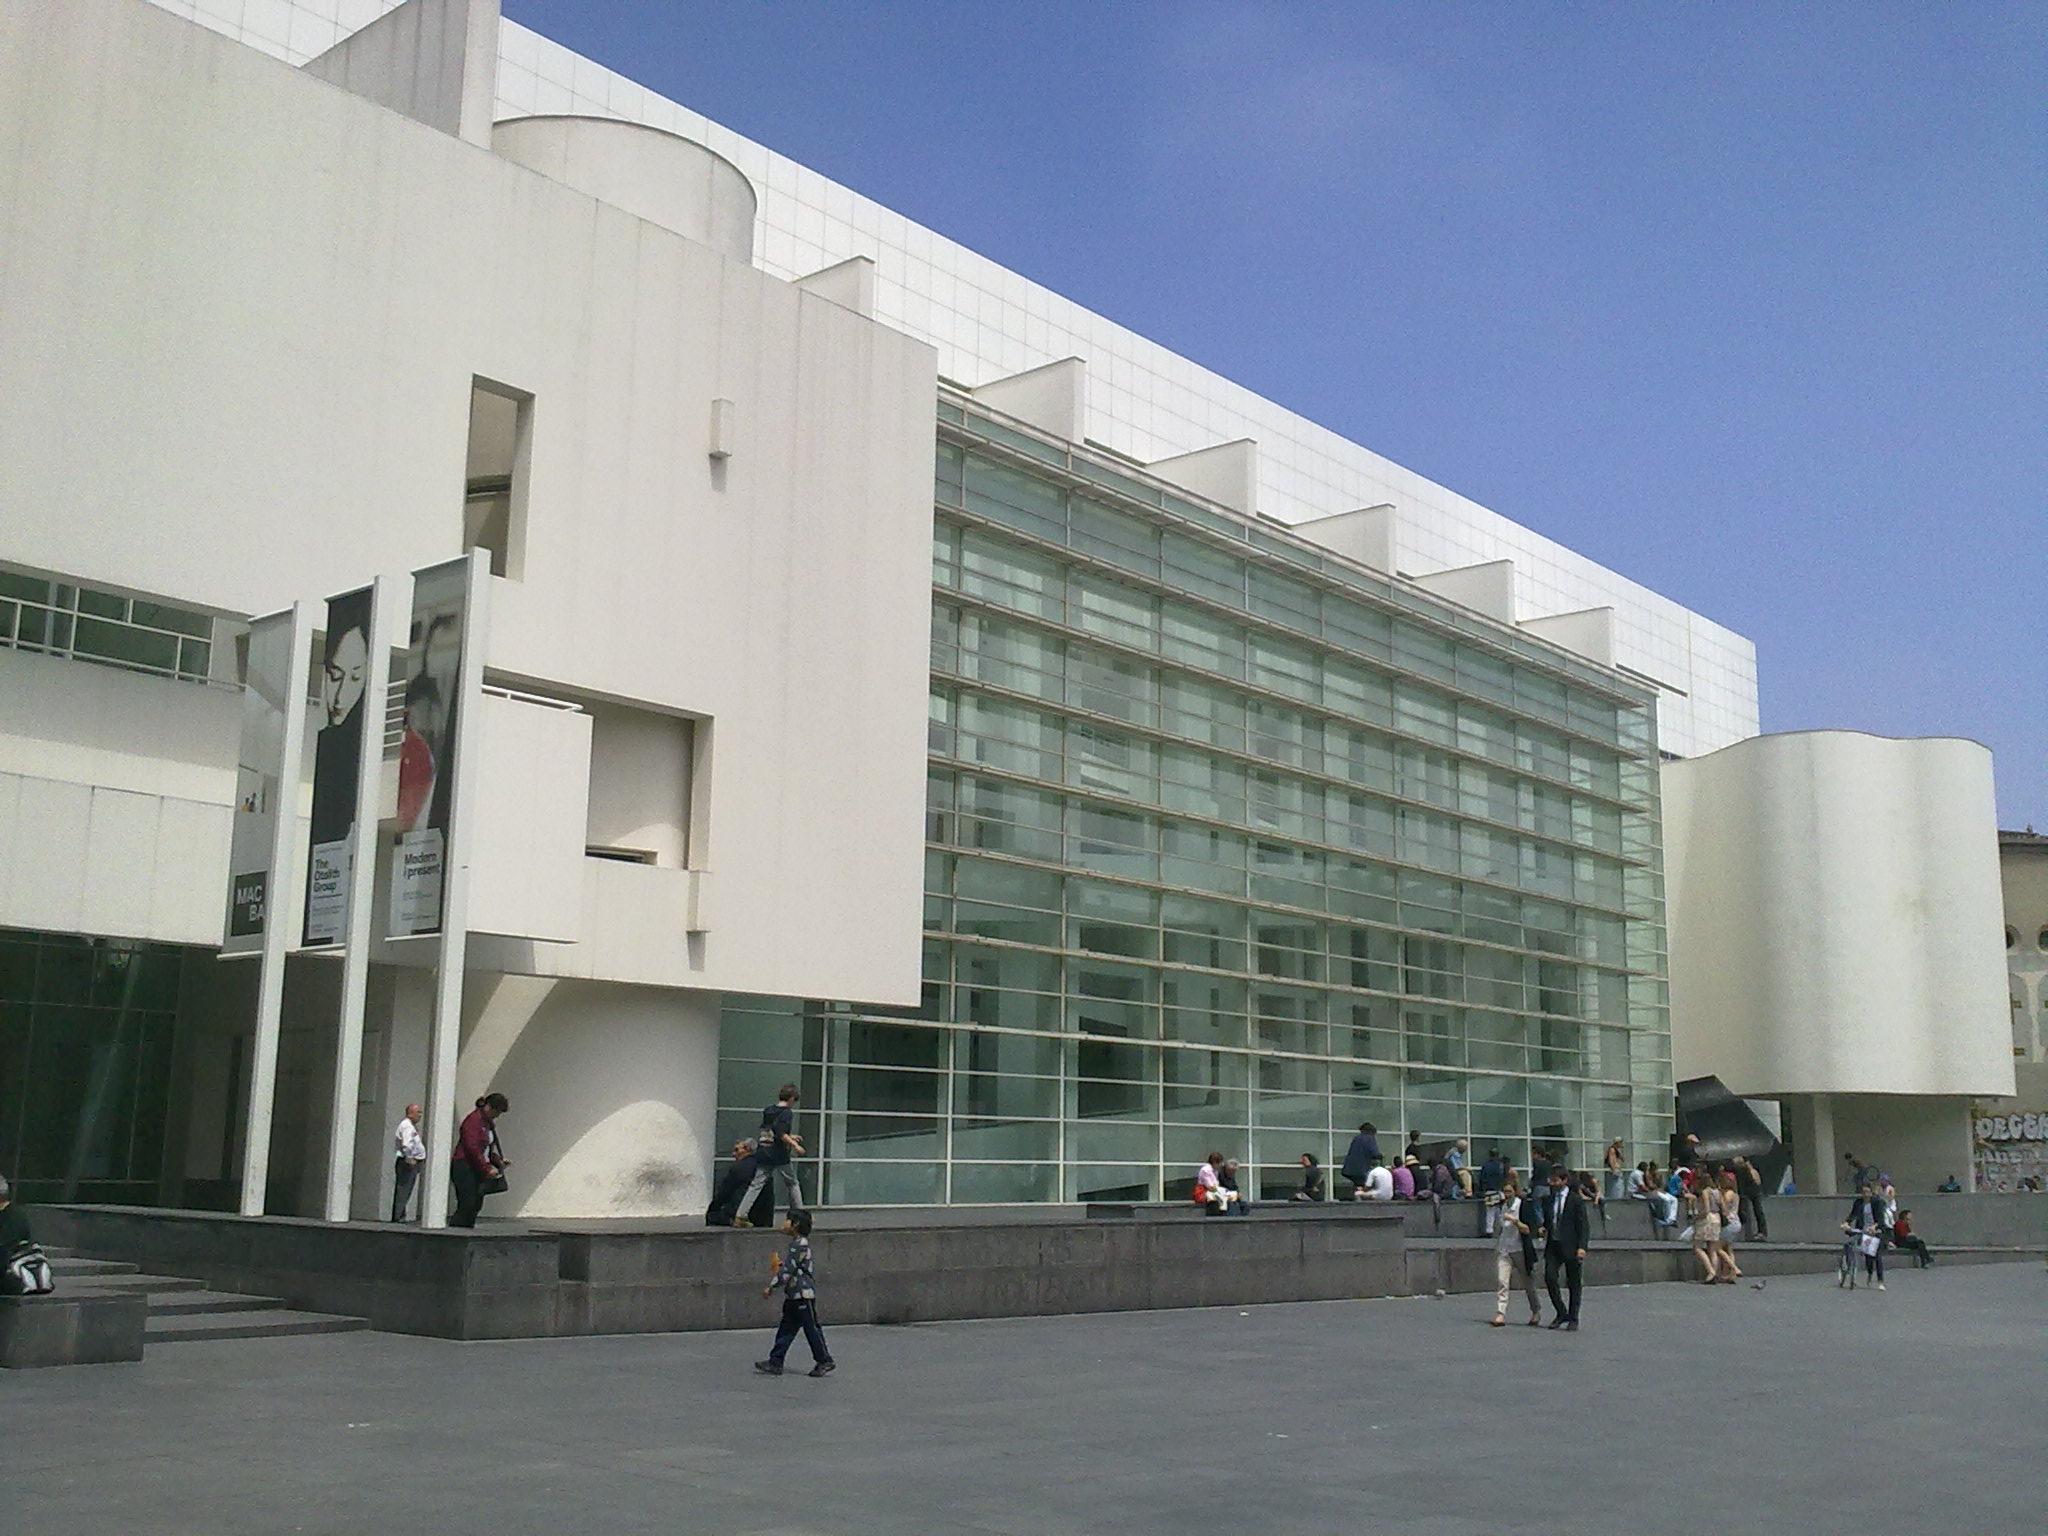 Cover image of this place Museu d'Art Contemporani de Barcelona MACBA